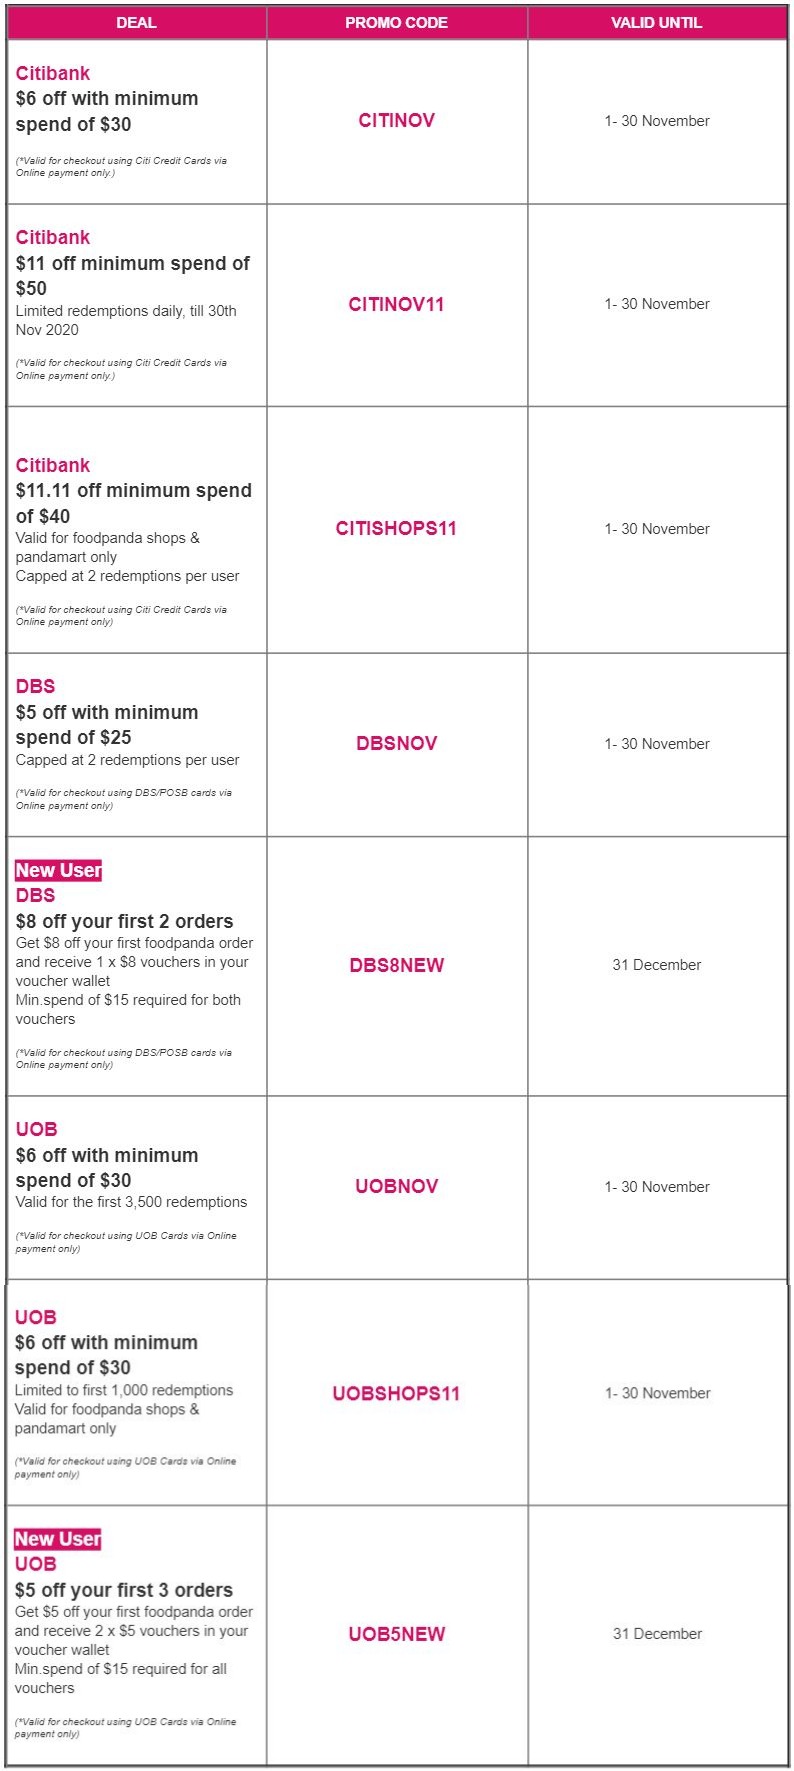 Here are 18 foodpanda promo codes for use in November 2020 - 2